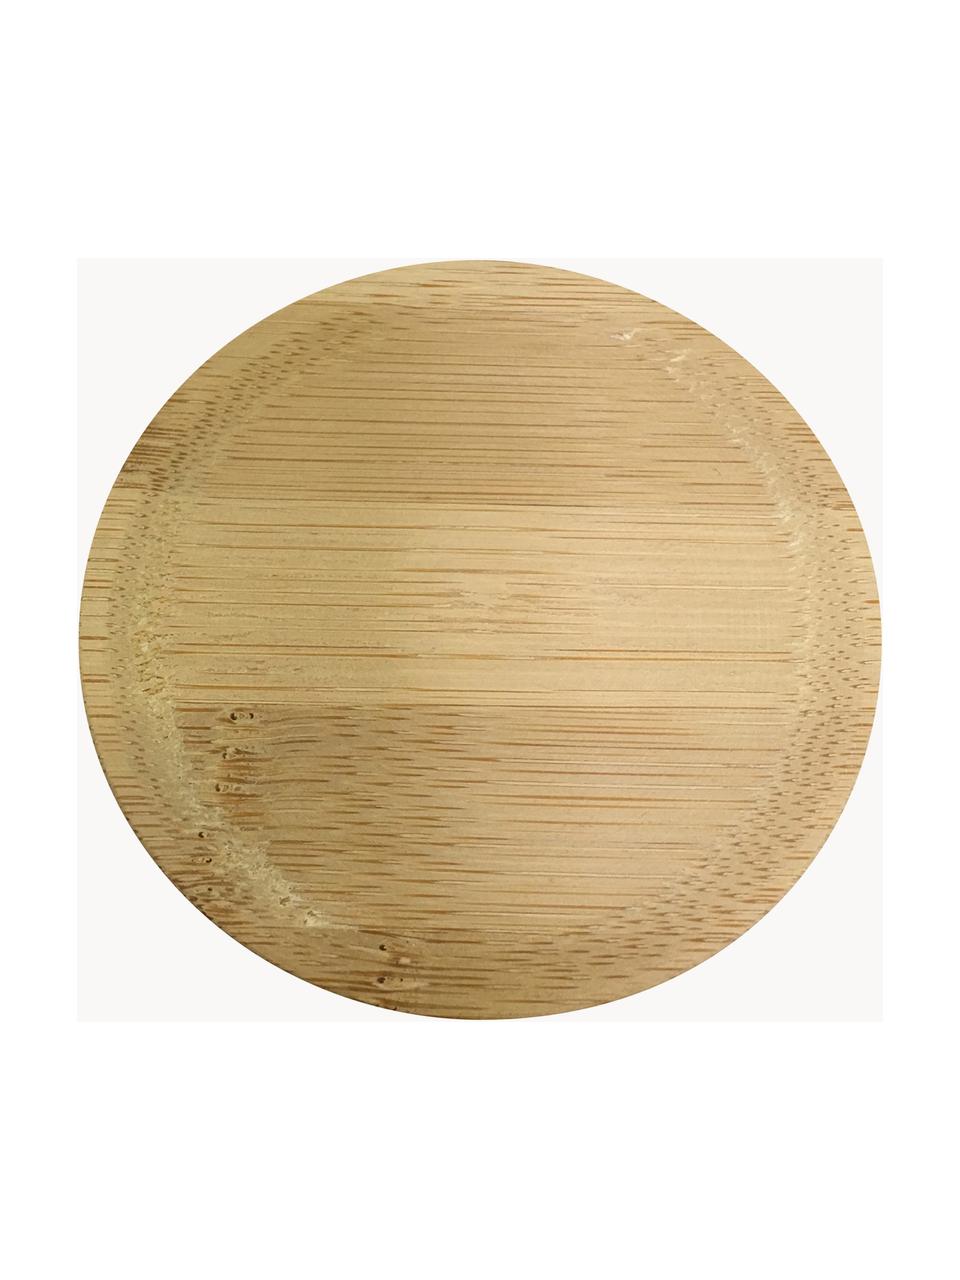 Beker Theo met deksel/onderzetter, Beker: fijn keramiek, Deksel: bamboe, Gebroken wit, Ø 8 x H 8 cm, 200 ml